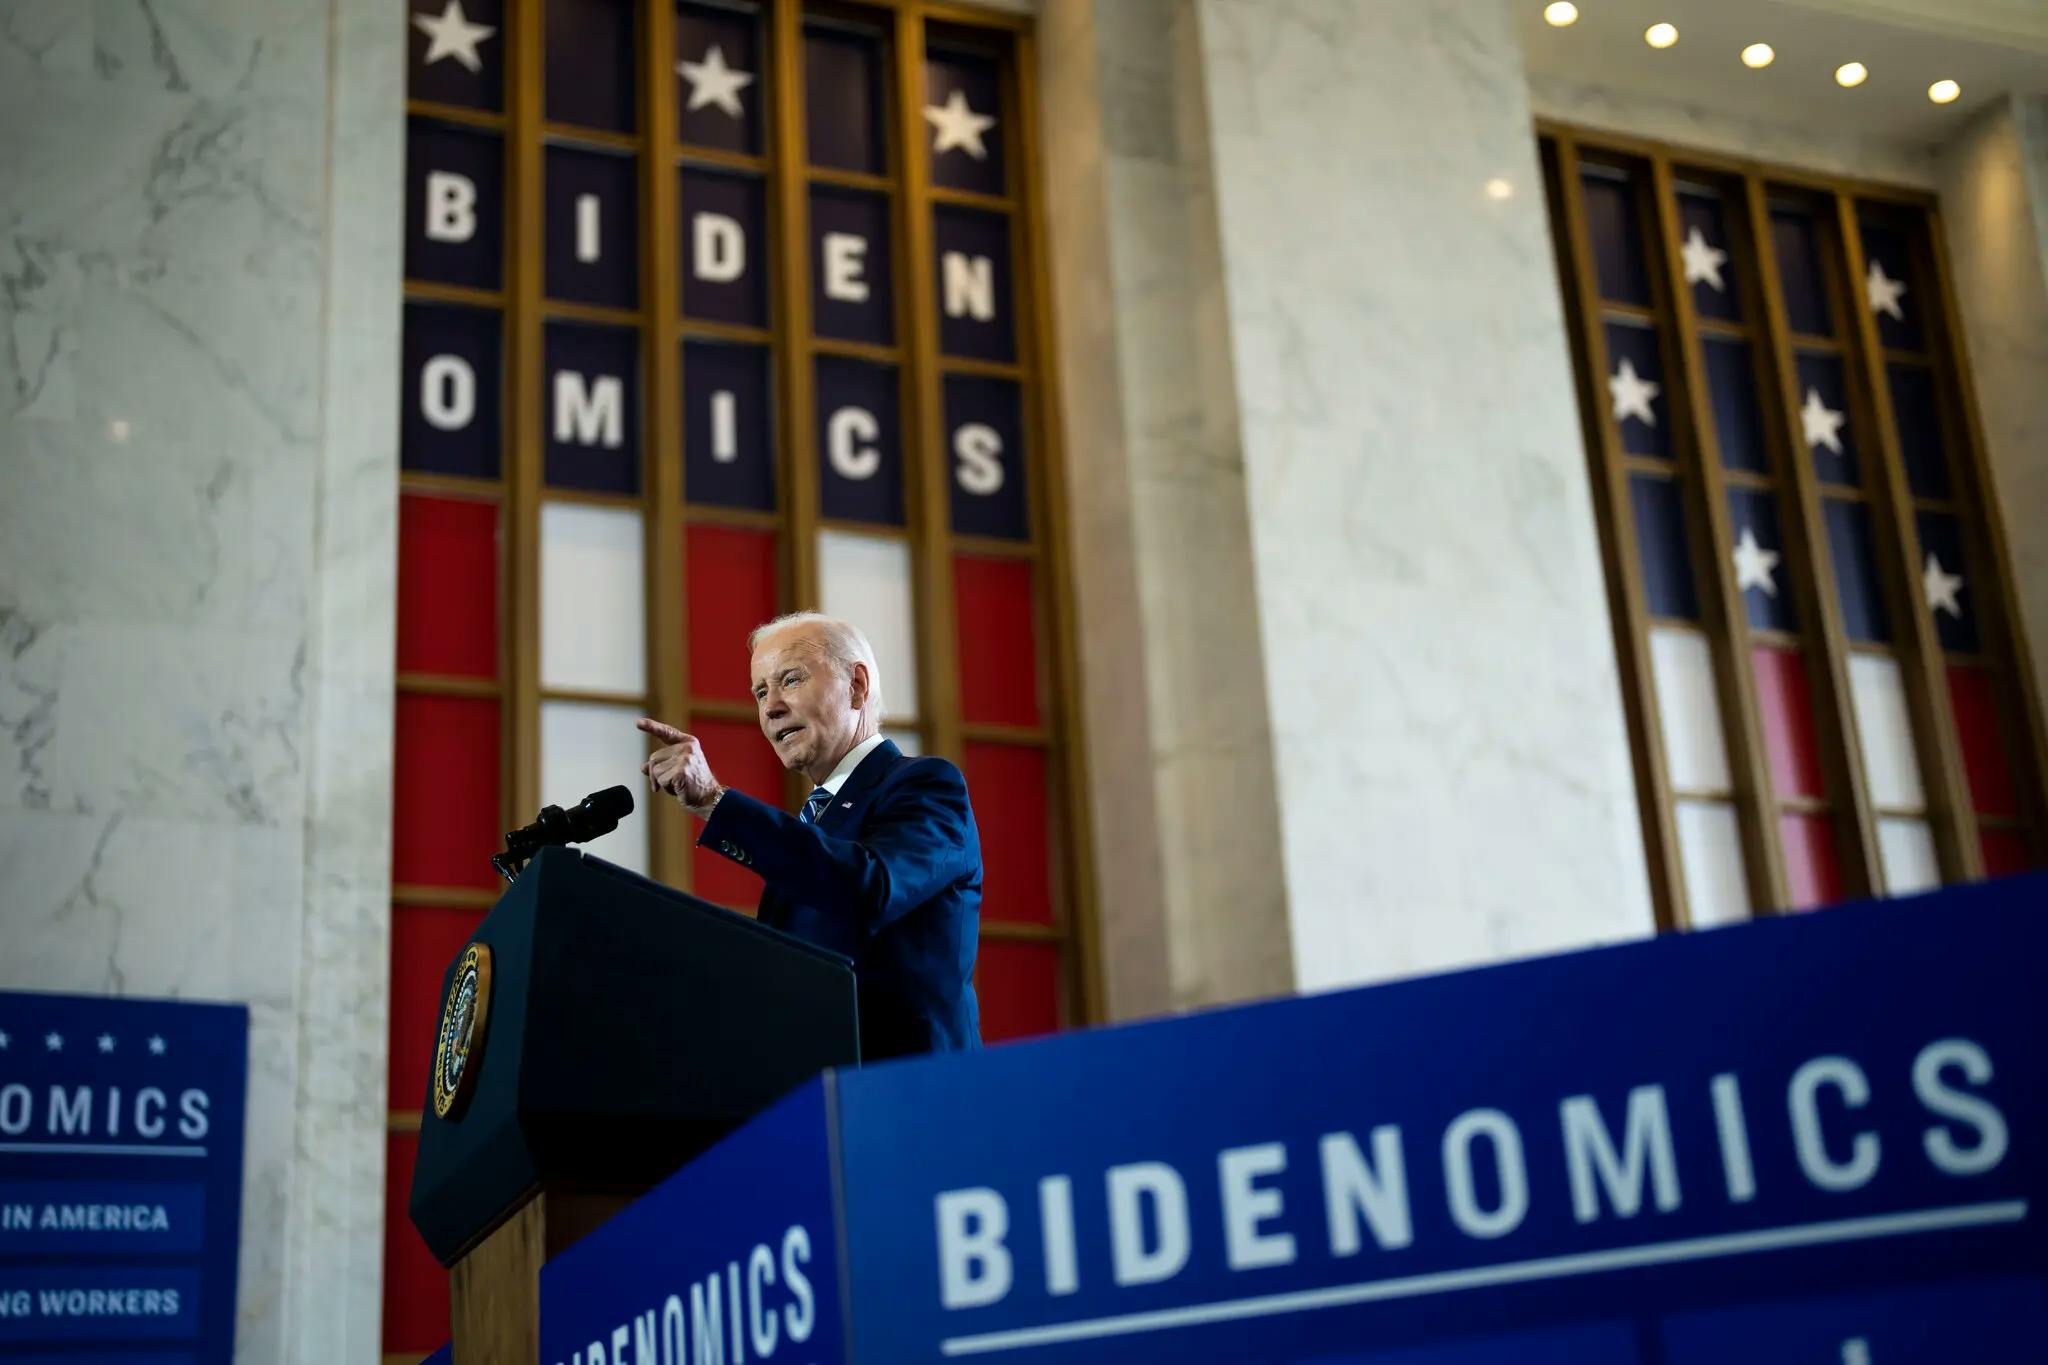 Biden giving a speech in Chicago